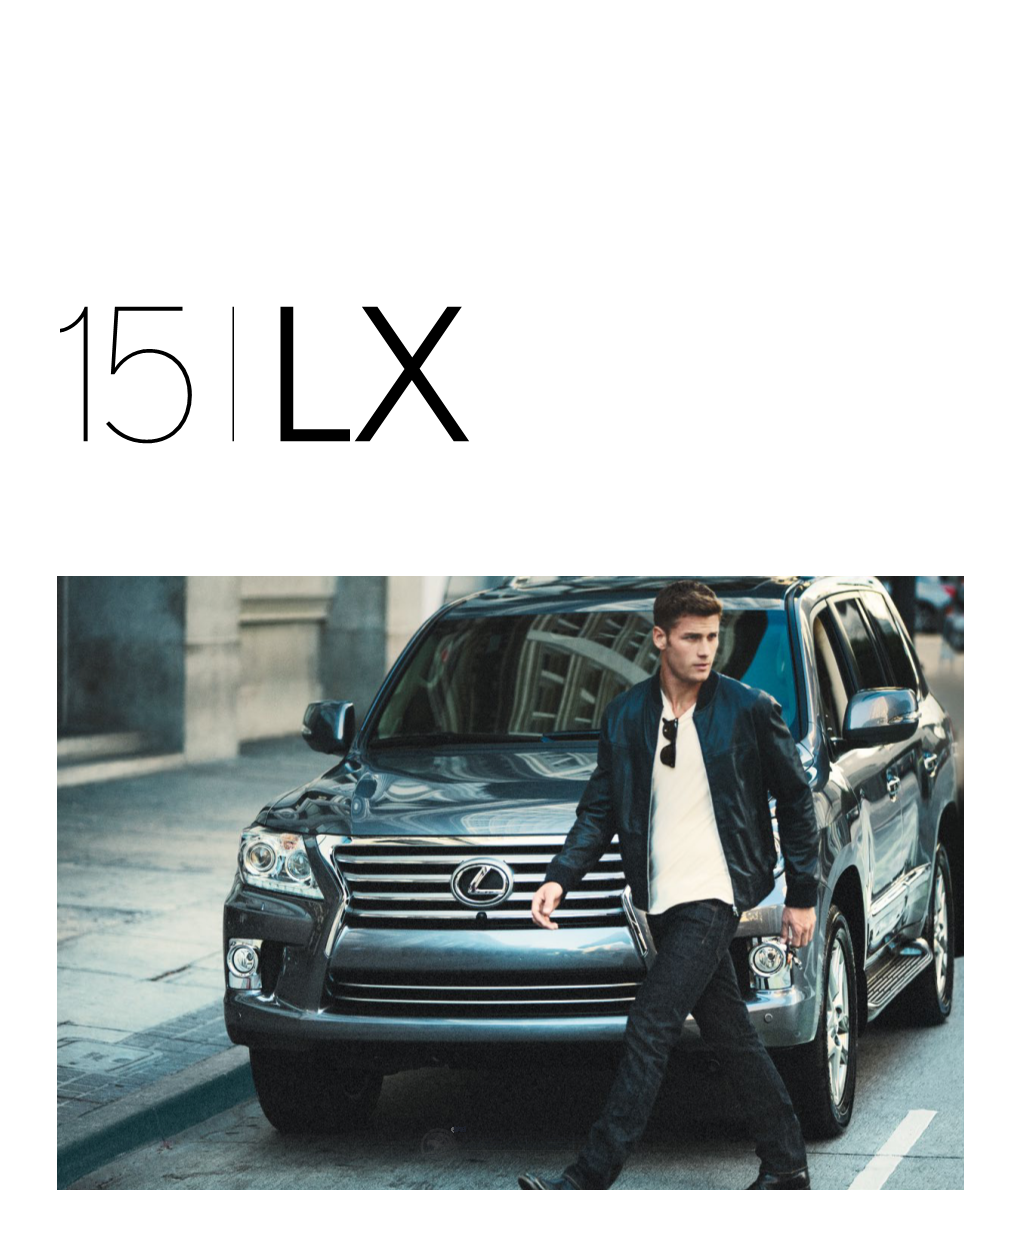 2015 Lexus Lx